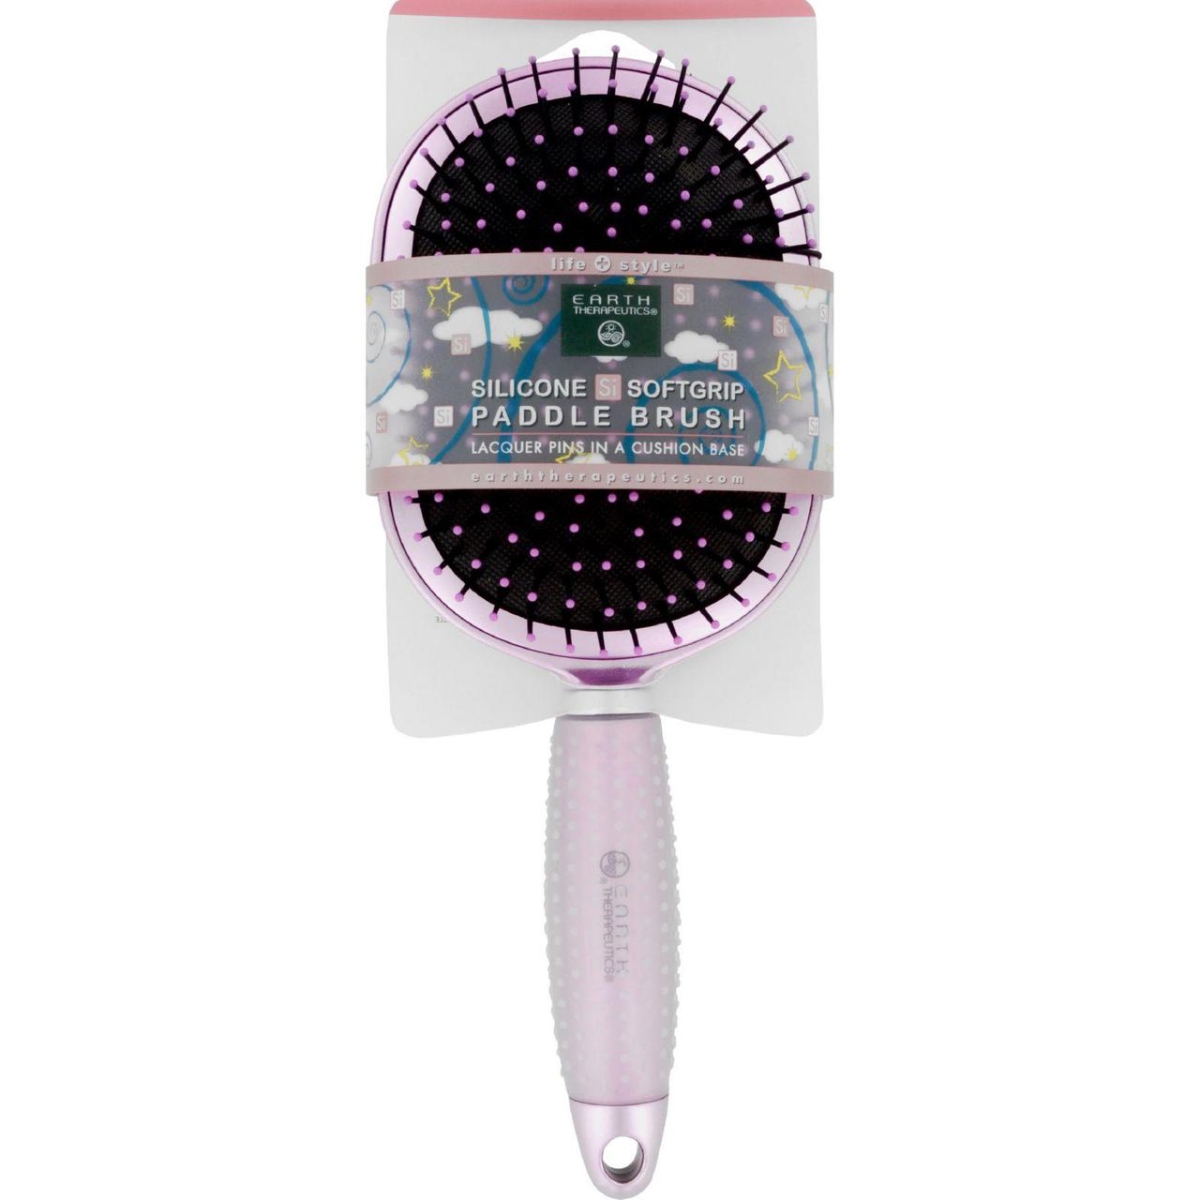 Silicon Hair Brush - Paddle, Pink